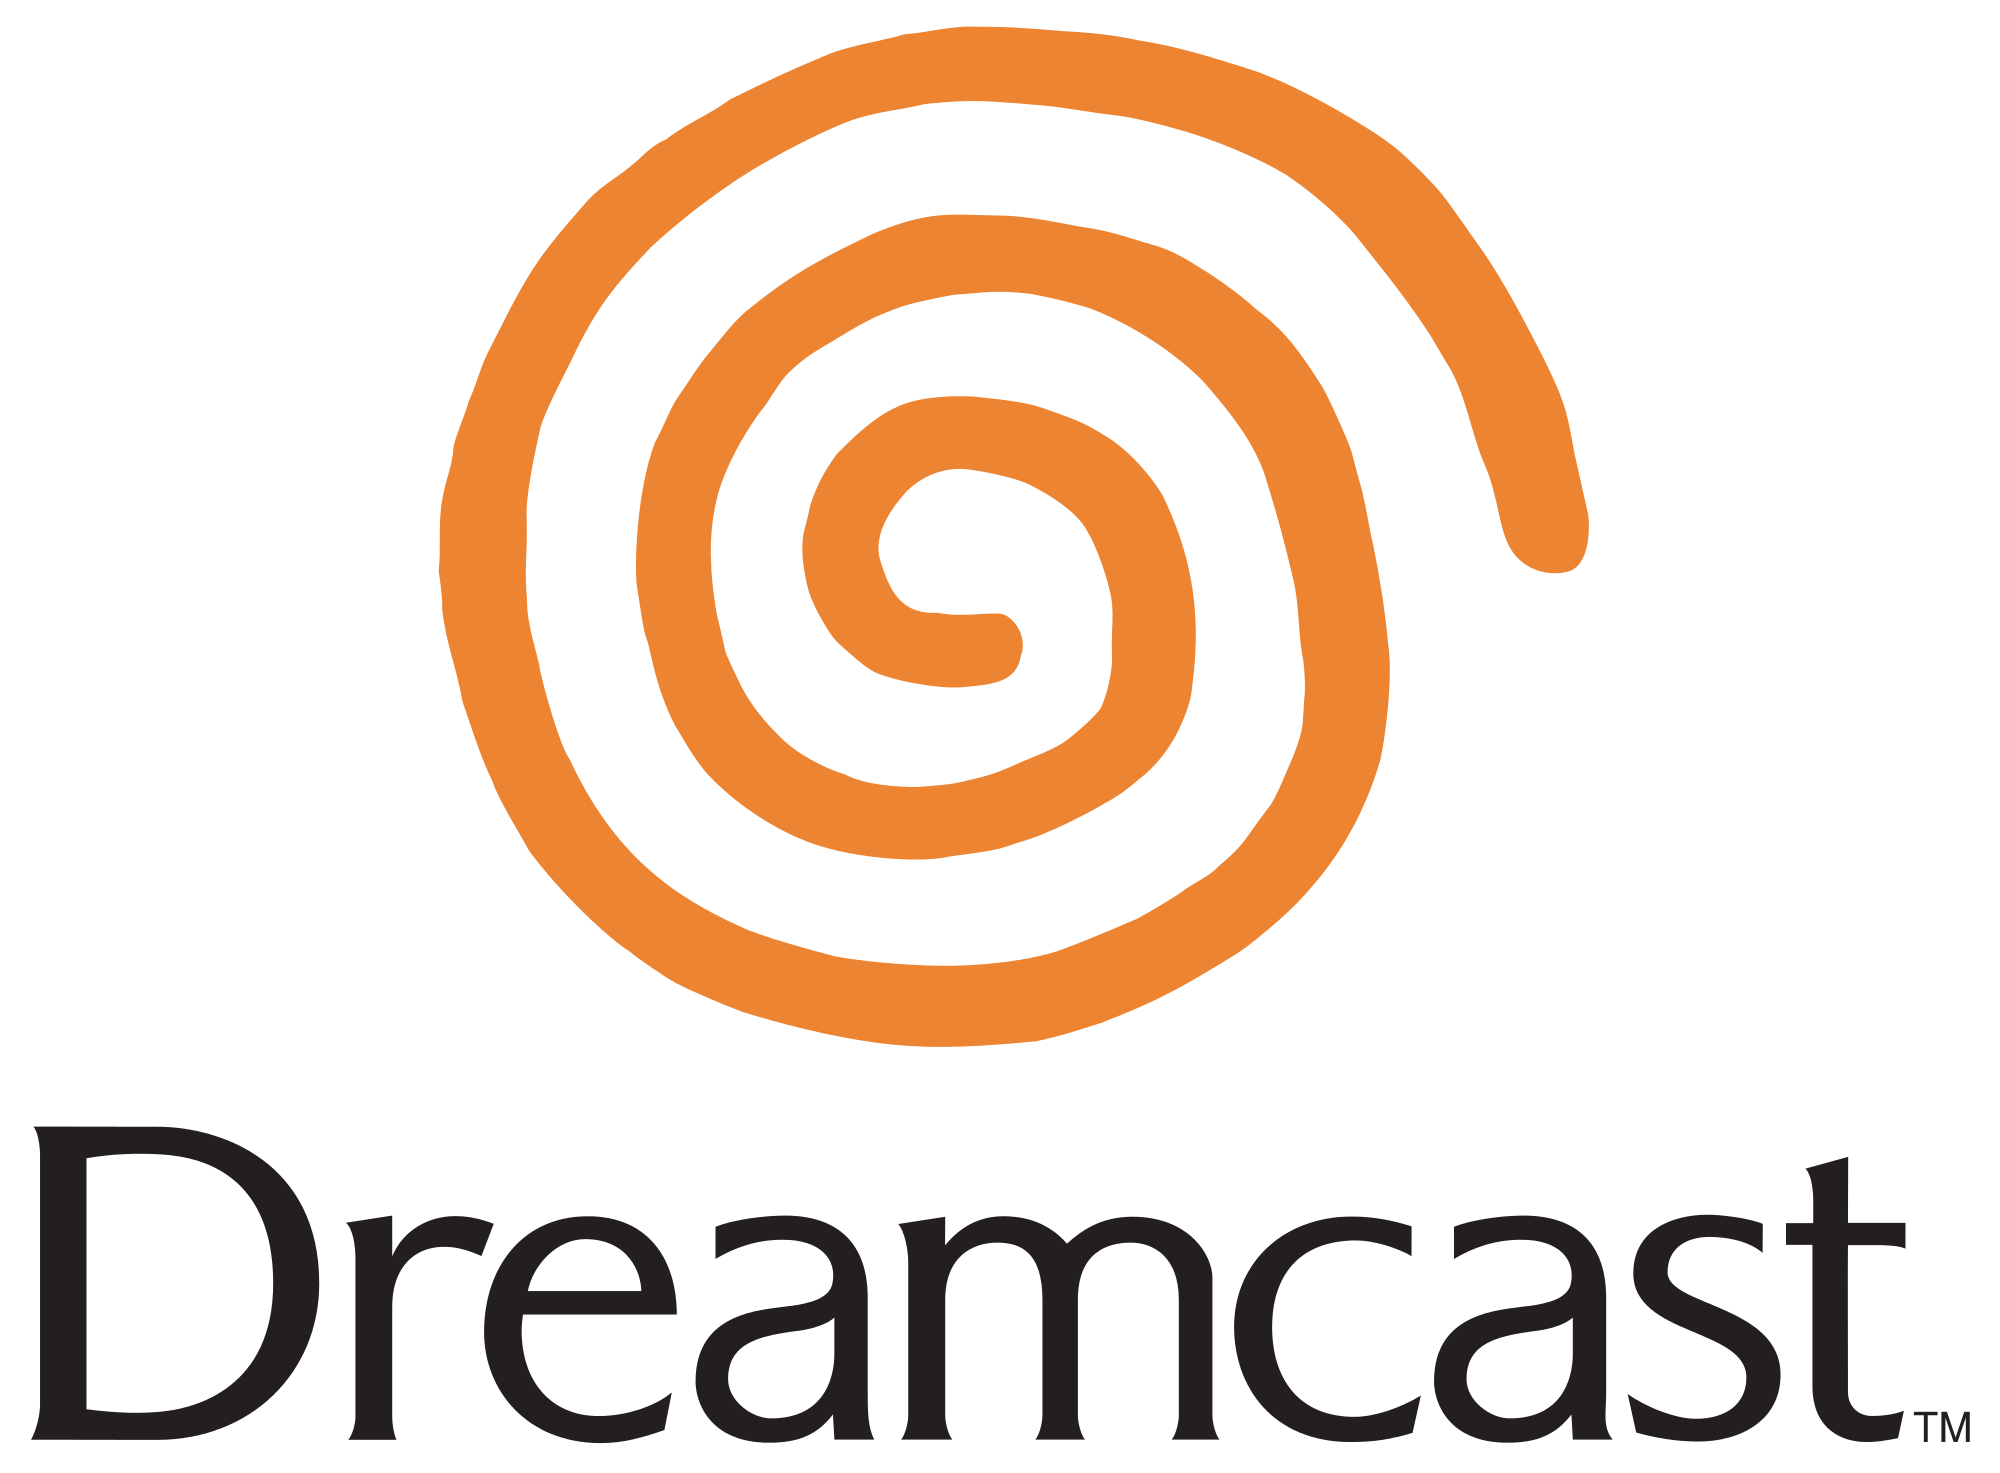 Orange Swirl Logo - File:Dreamcast logo (orange).svg - Wikimedia Commons